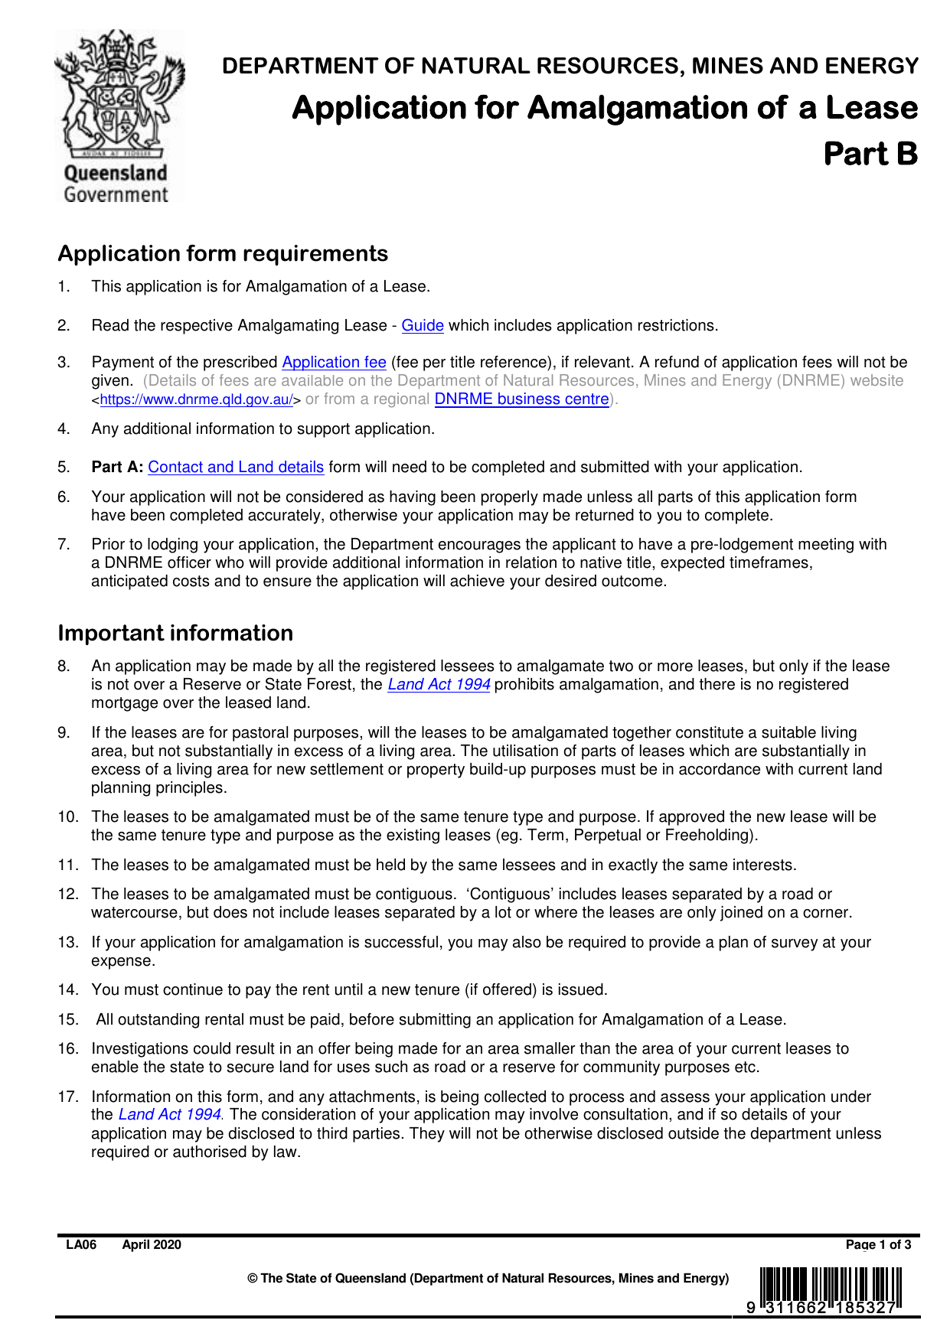 Form LA06 Part B Application for Amalgamation of a Lease - Queensland, Australia, Page 1